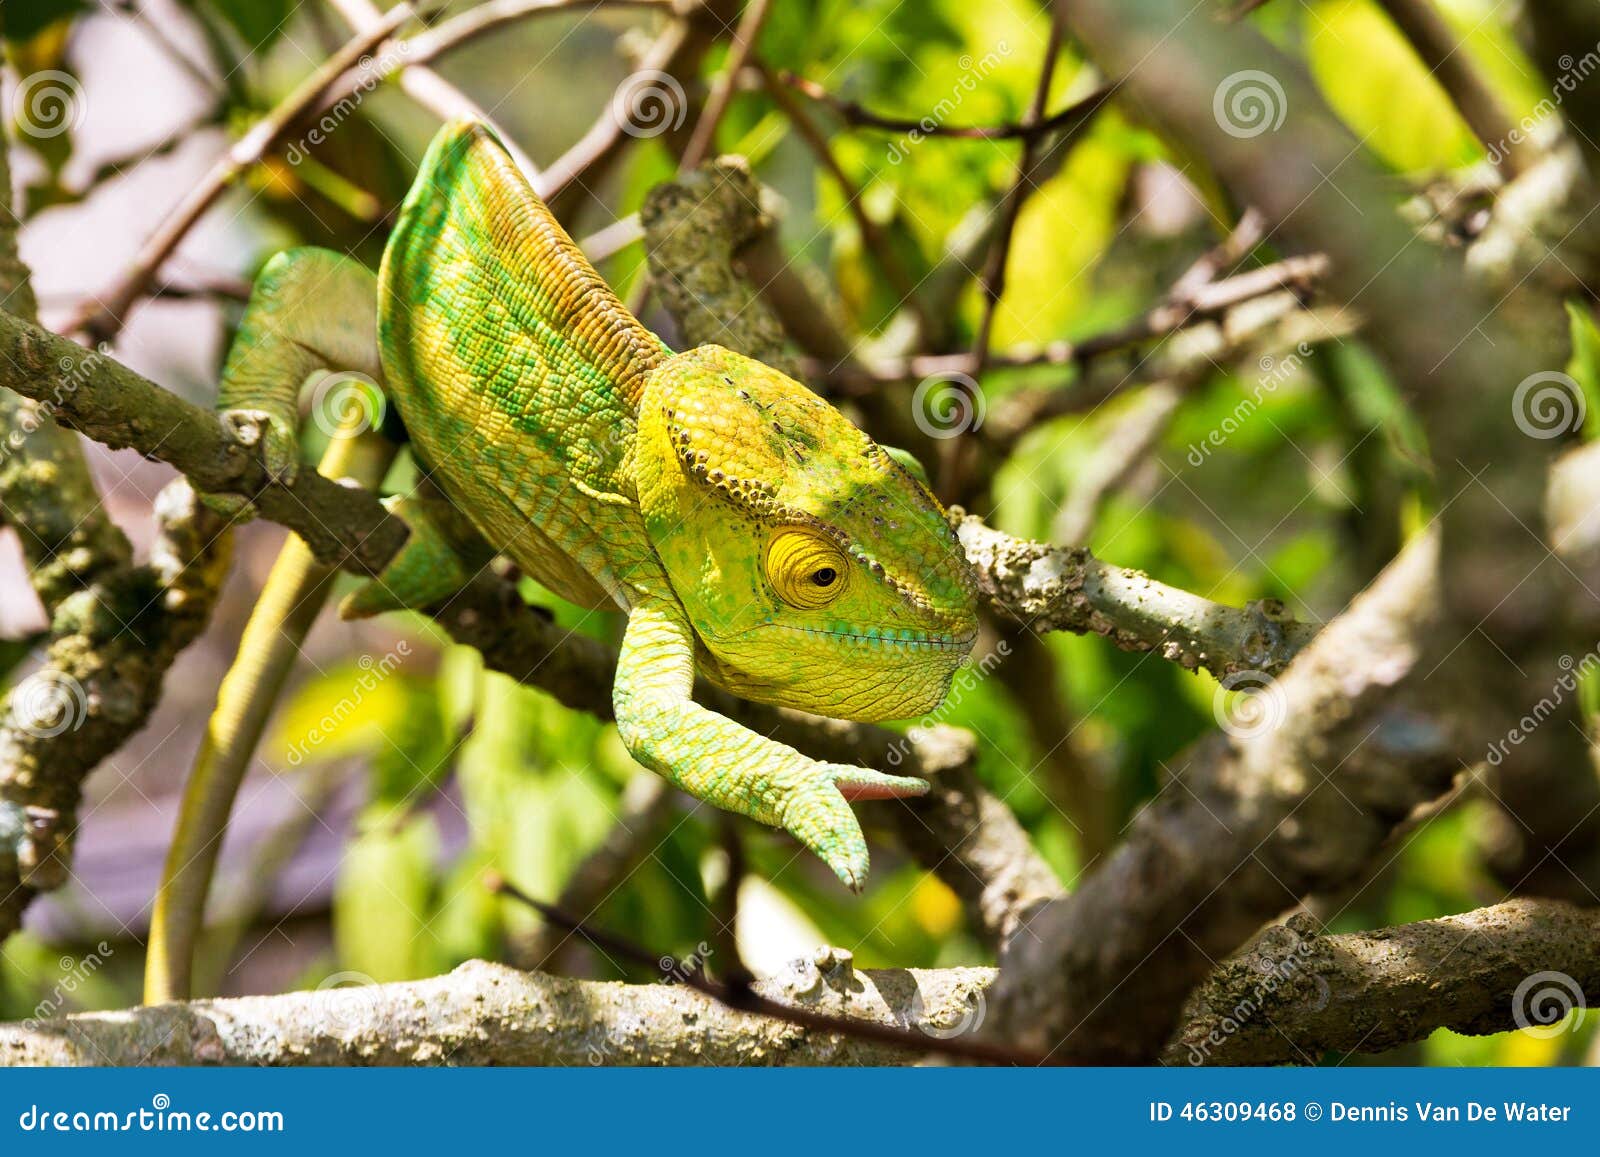 yellow green chameleon